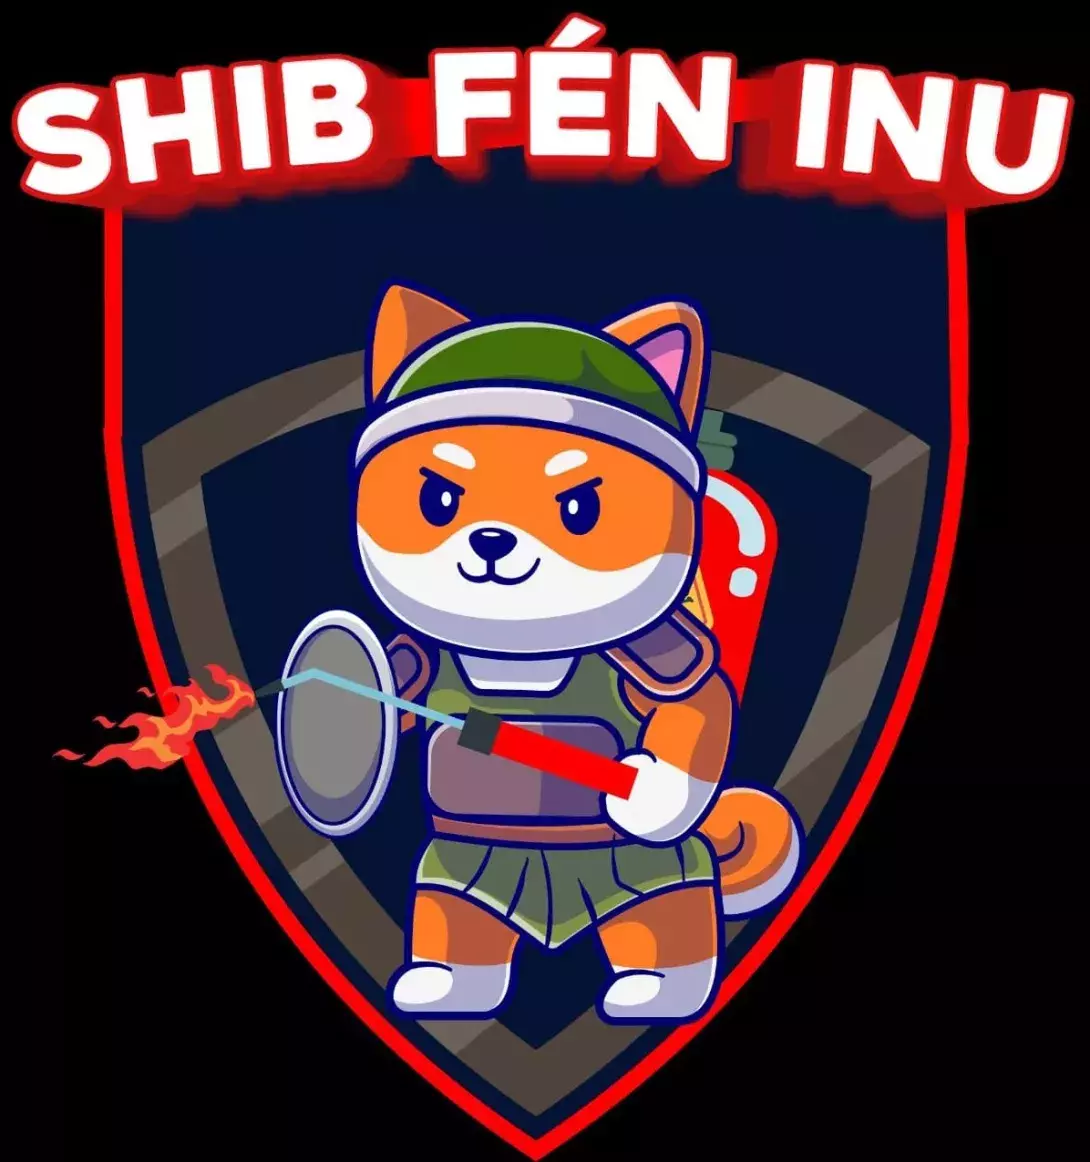 ShibFén Inu Team Announces Its New Token